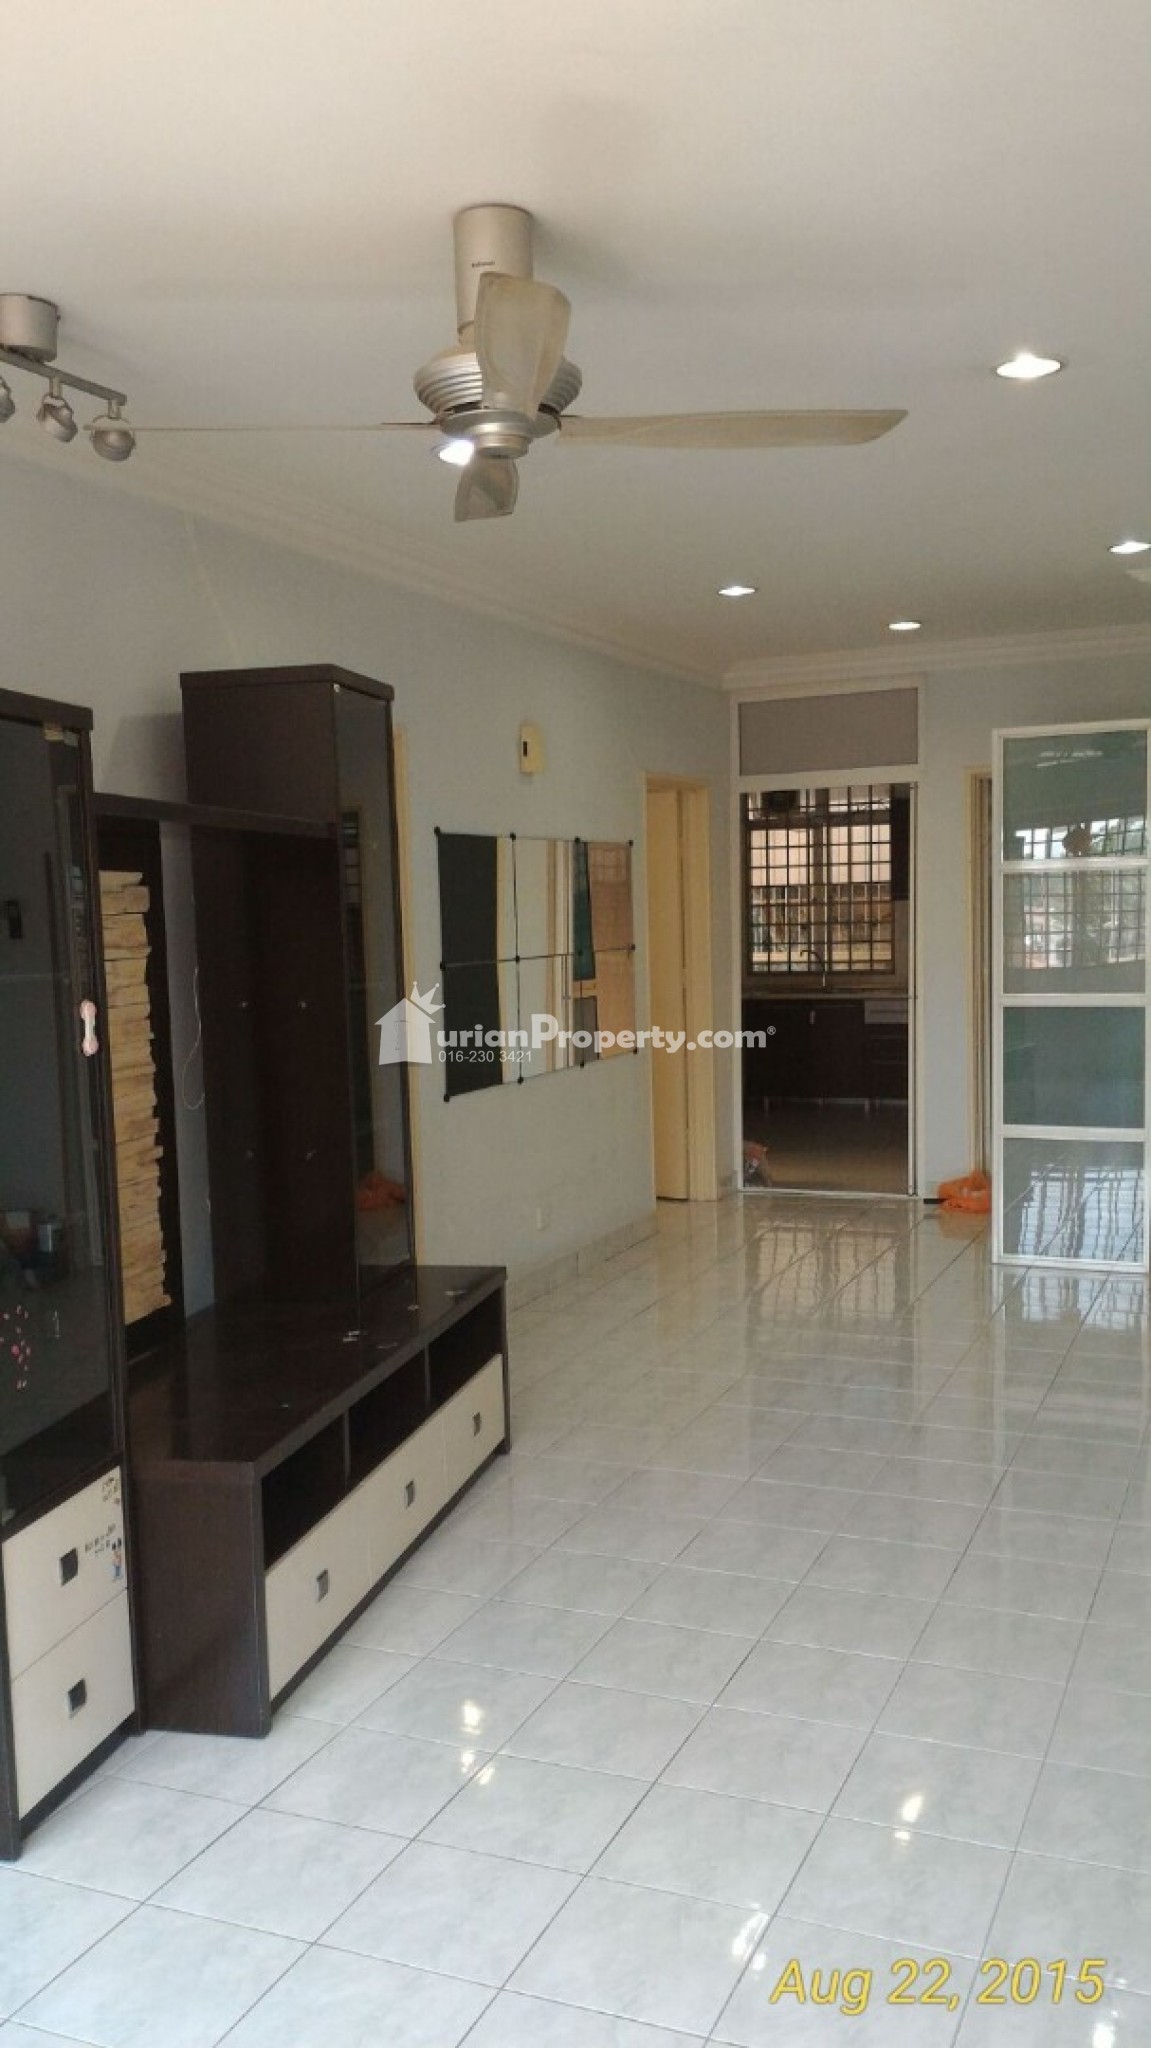 Apartment For Sale at Taman Lagenda Mas